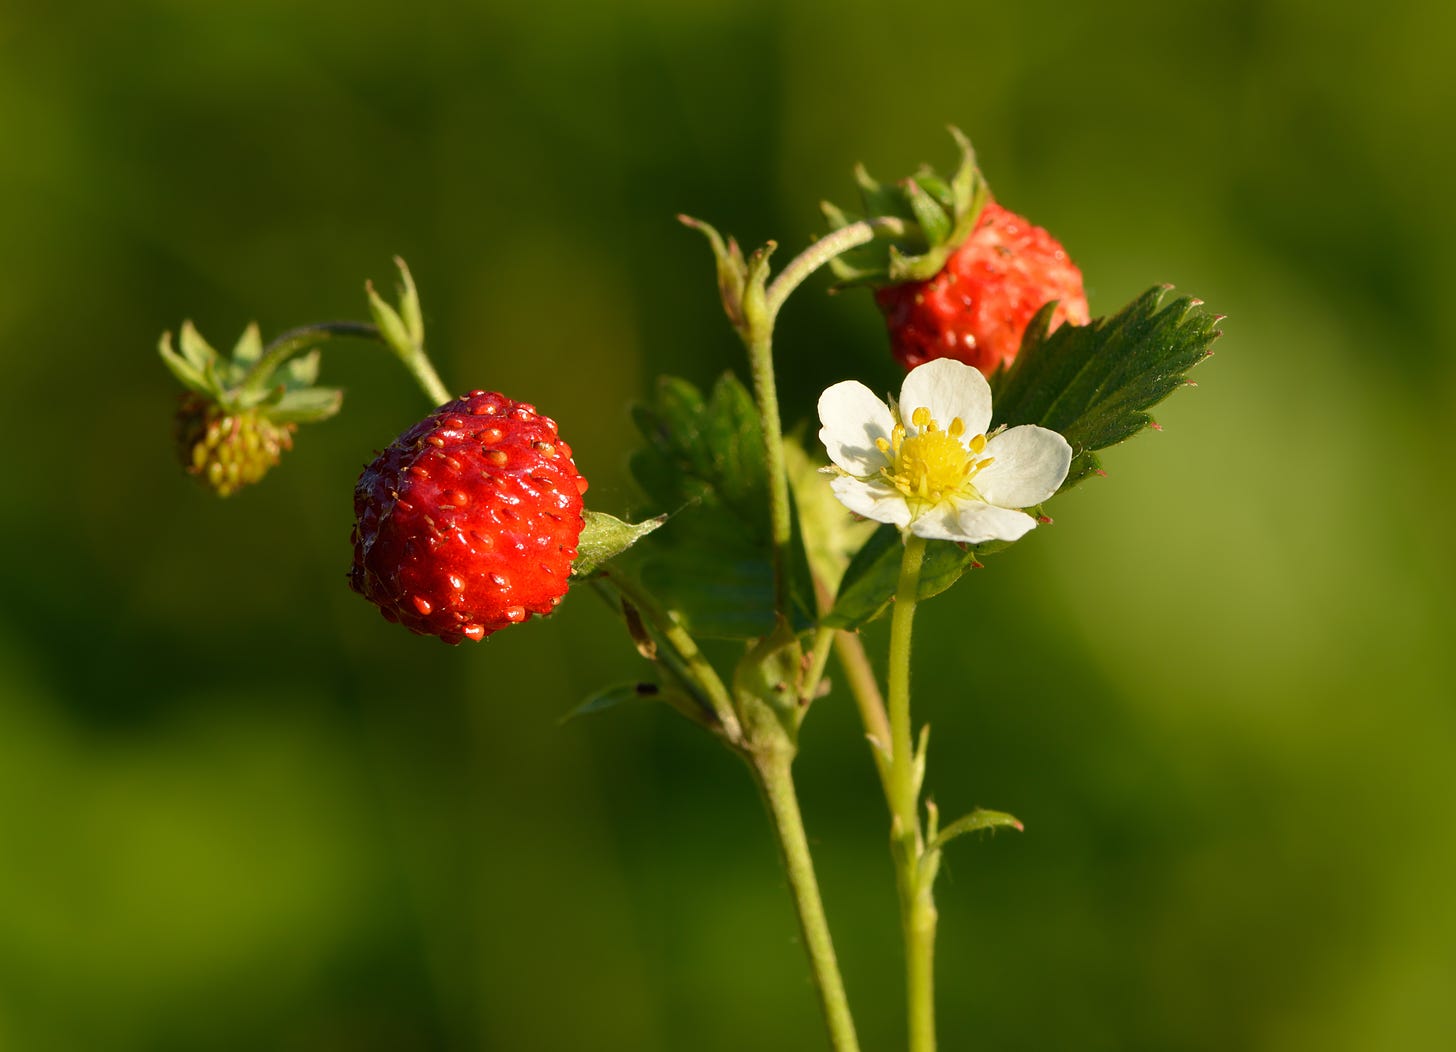 Eesti: Metsmaasikas (Fragaria vesca). Pakri poolsaar. English: Wild strawberry (Fragaria vesca). Pakri peninsula. Date	25 June 2013, 19:58:50 Source	Own work Author	Ivar Leidus